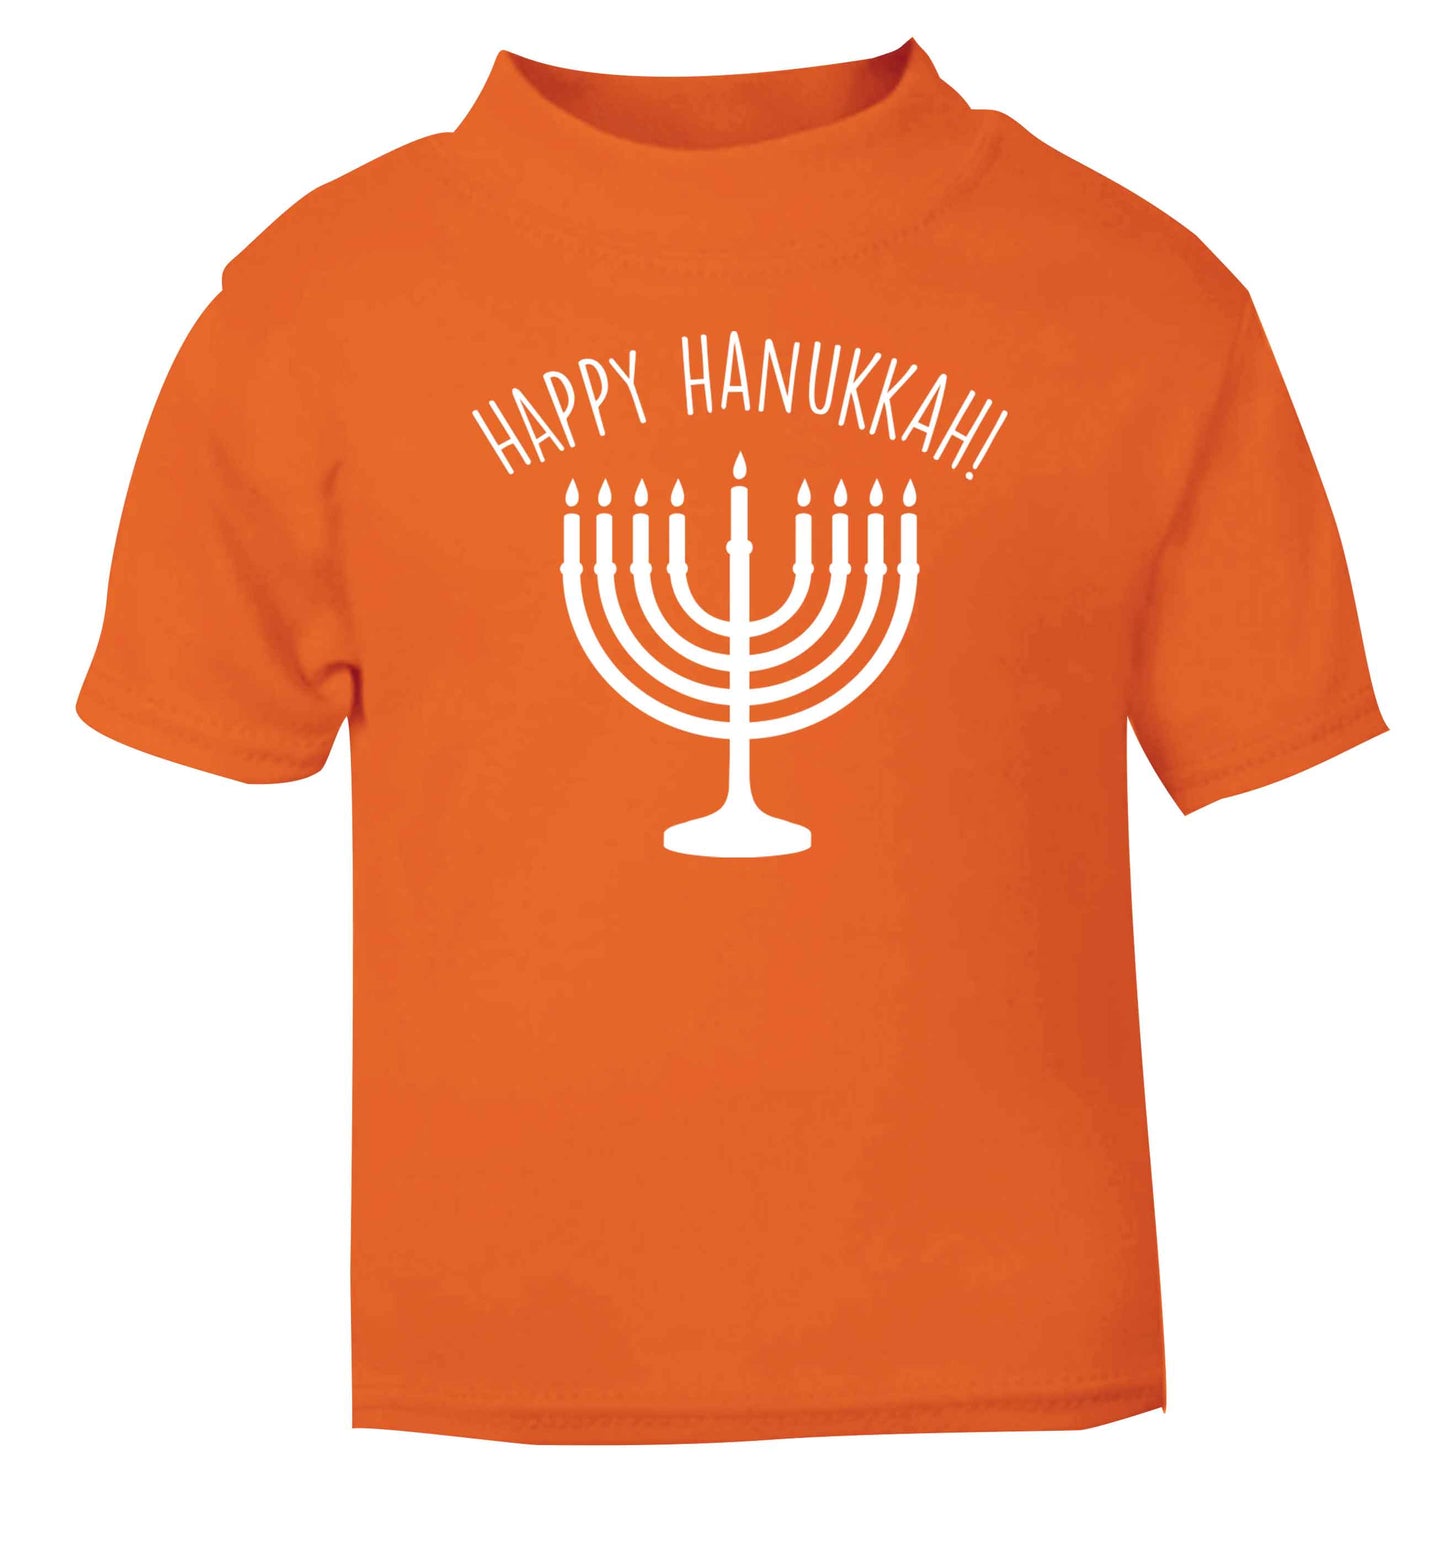 Happy hanukkah orange baby toddler Tshirt 2 Years